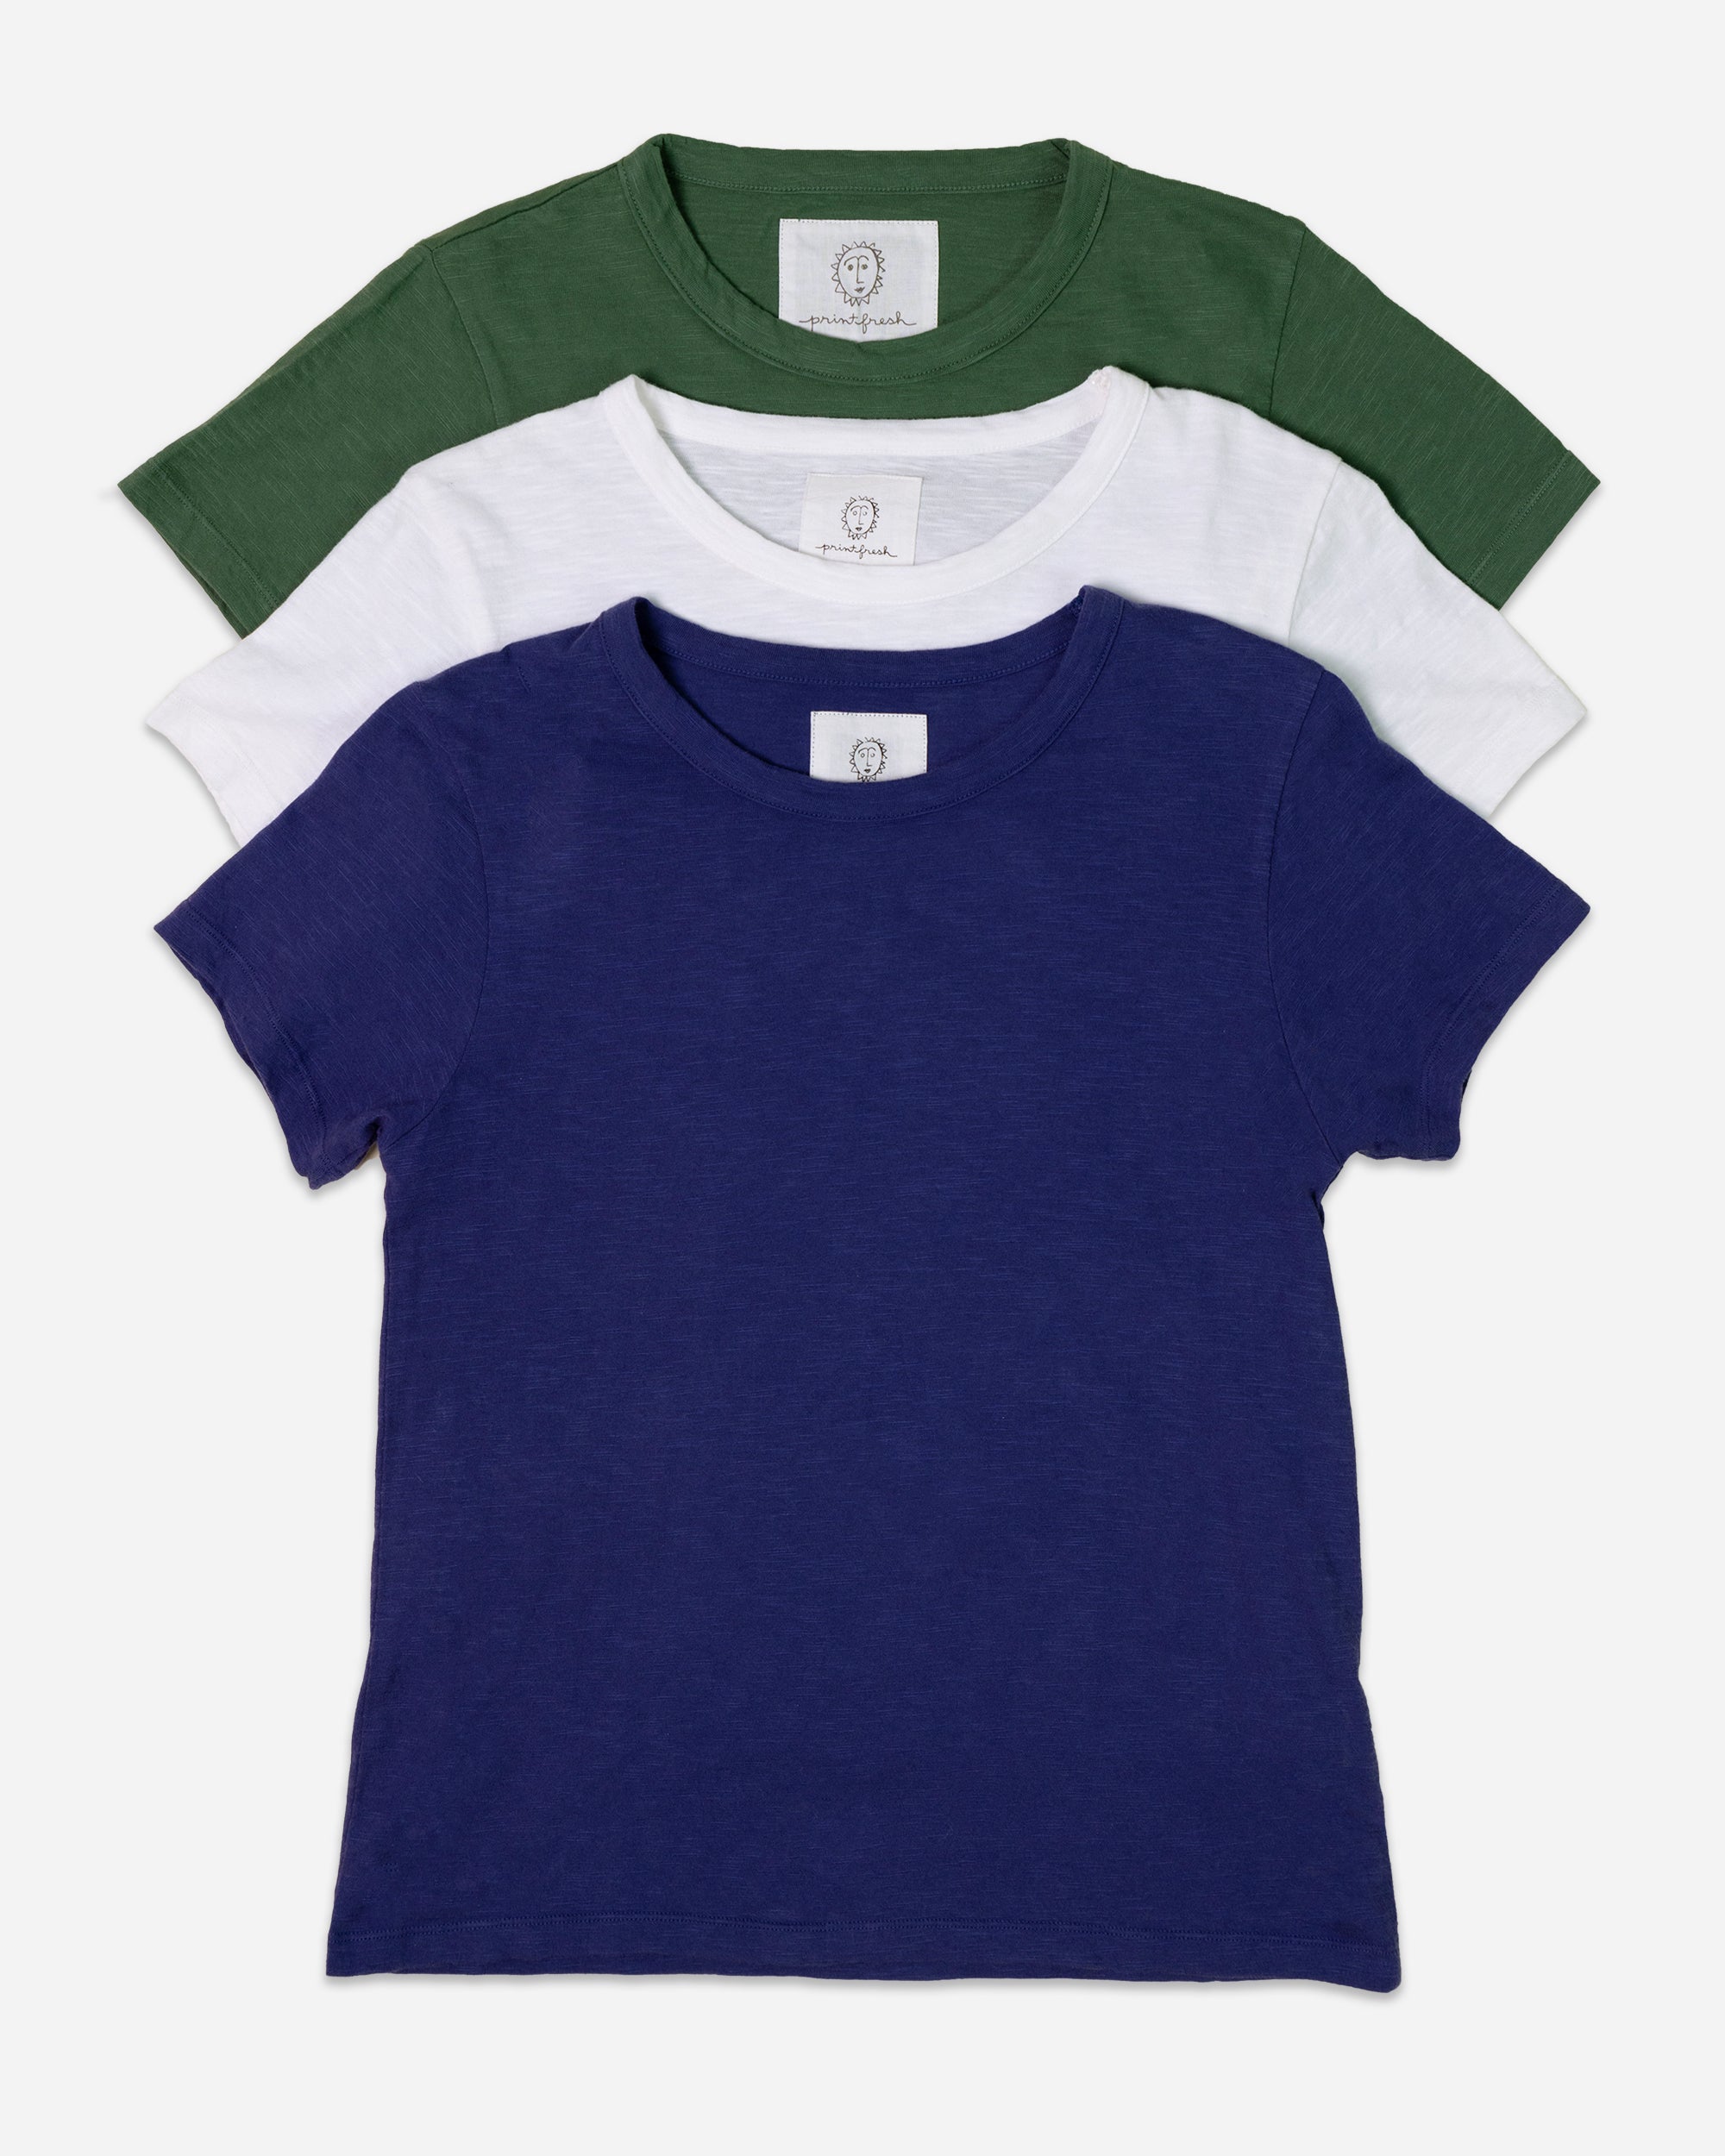 Saturday Tee - Knit T-Shirt 3-Pack - Cloud/Basil/Indigo - Printfresh